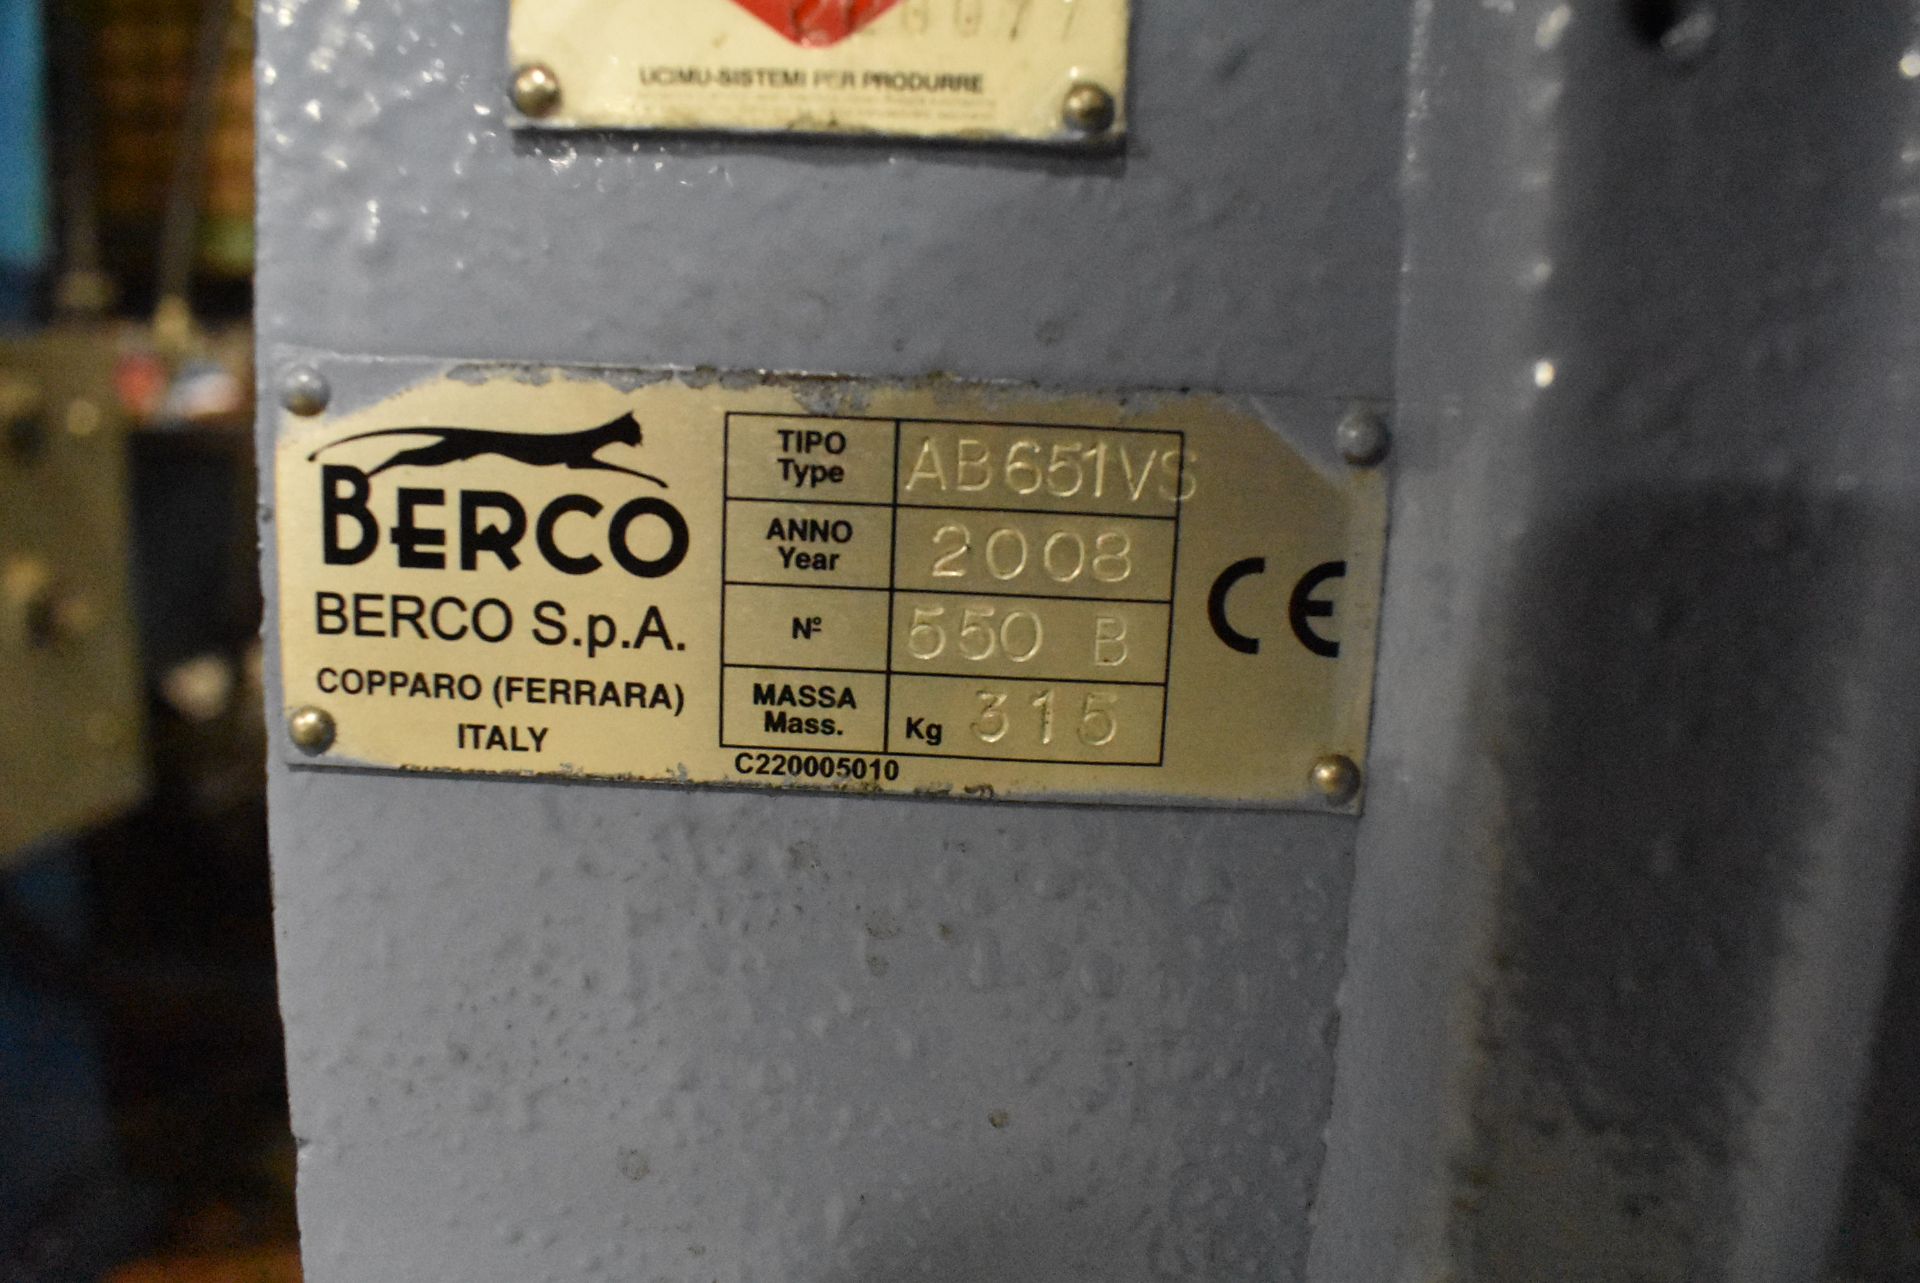 BERCO MODEL AB-651-VS CONNECTING ROD BORING MACHINE S/N 550B (2008), 13-150MM BORING DIAMETER, 360MM - Image 2 of 9